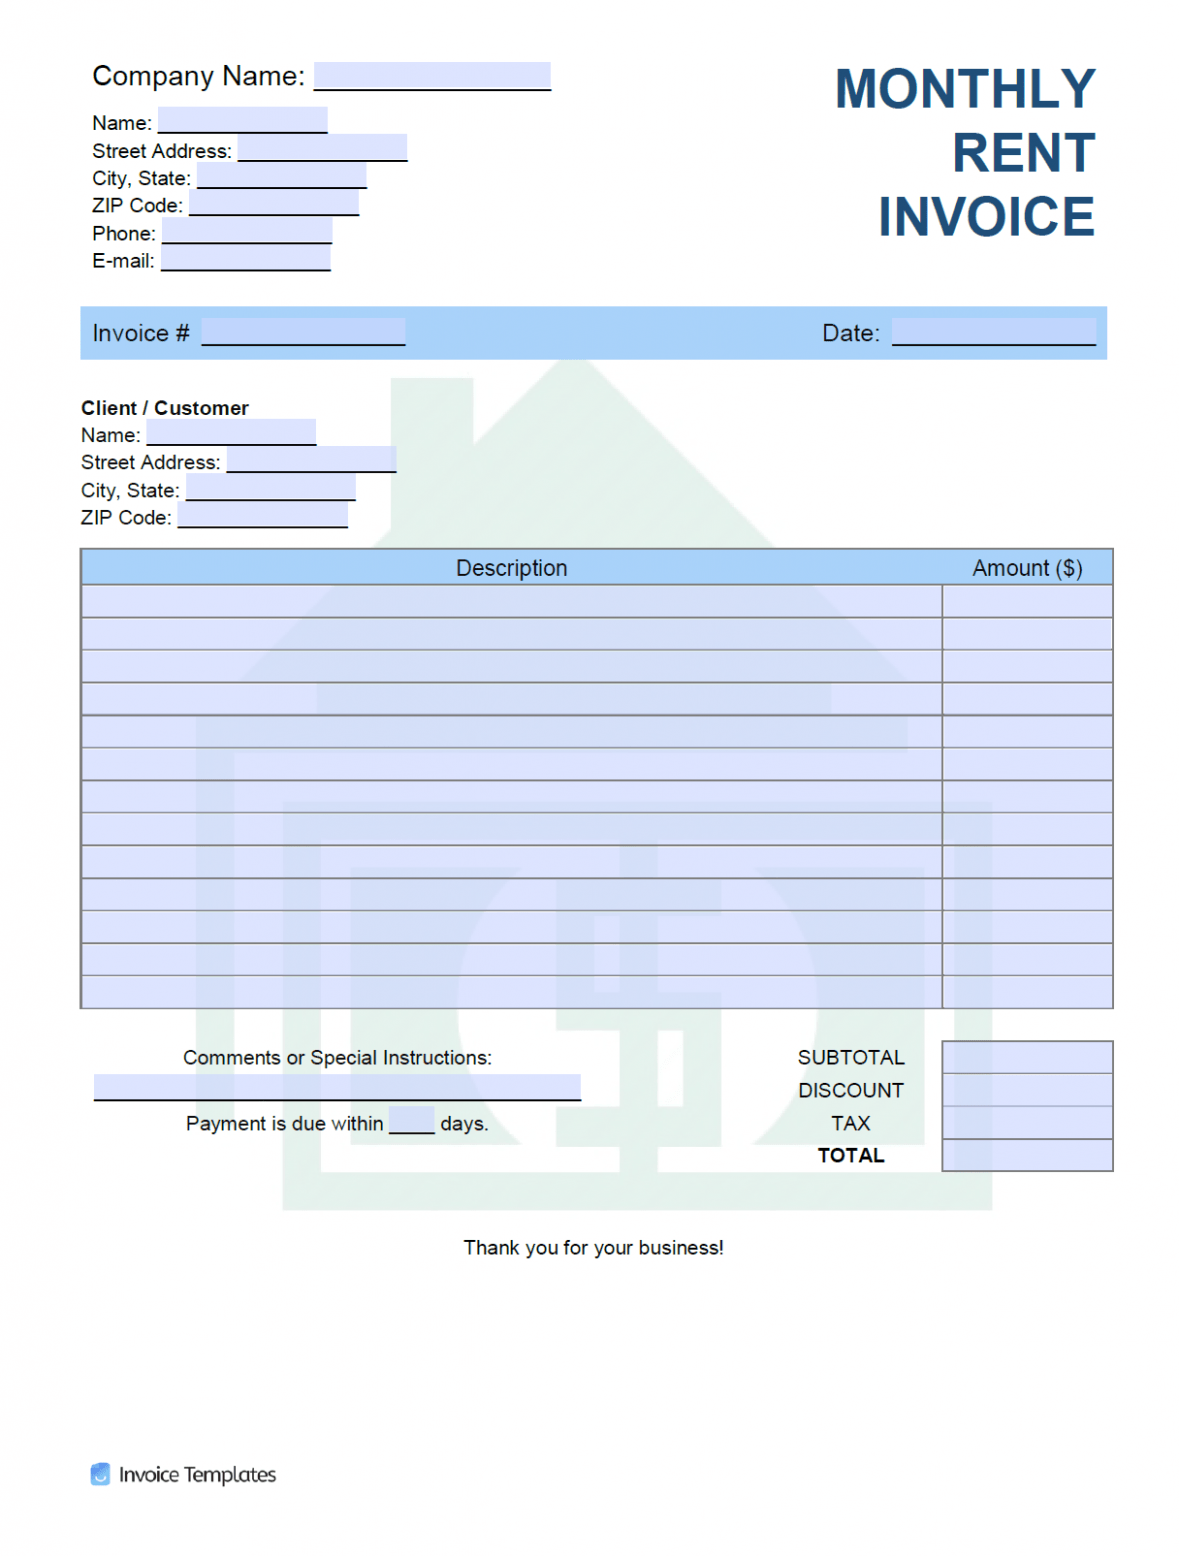 Sample Rental Property Invoice Template Doc